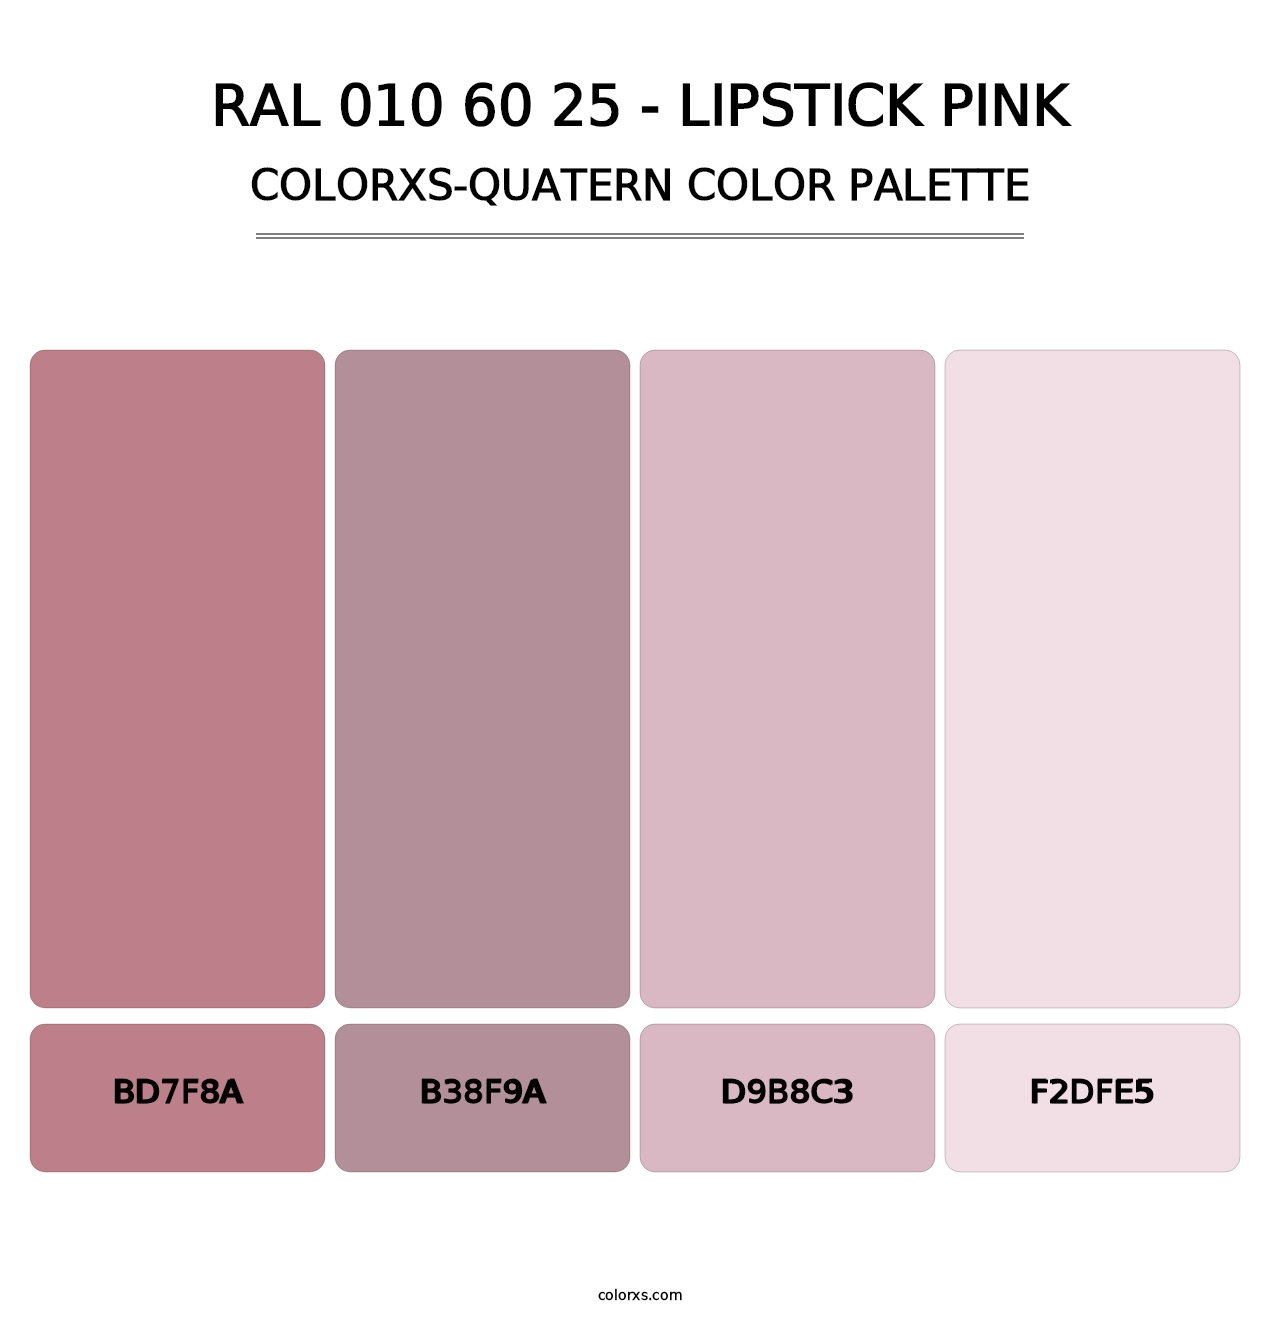 RAL 010 60 25 - Lipstick Pink - Colorxs Quatern Palette